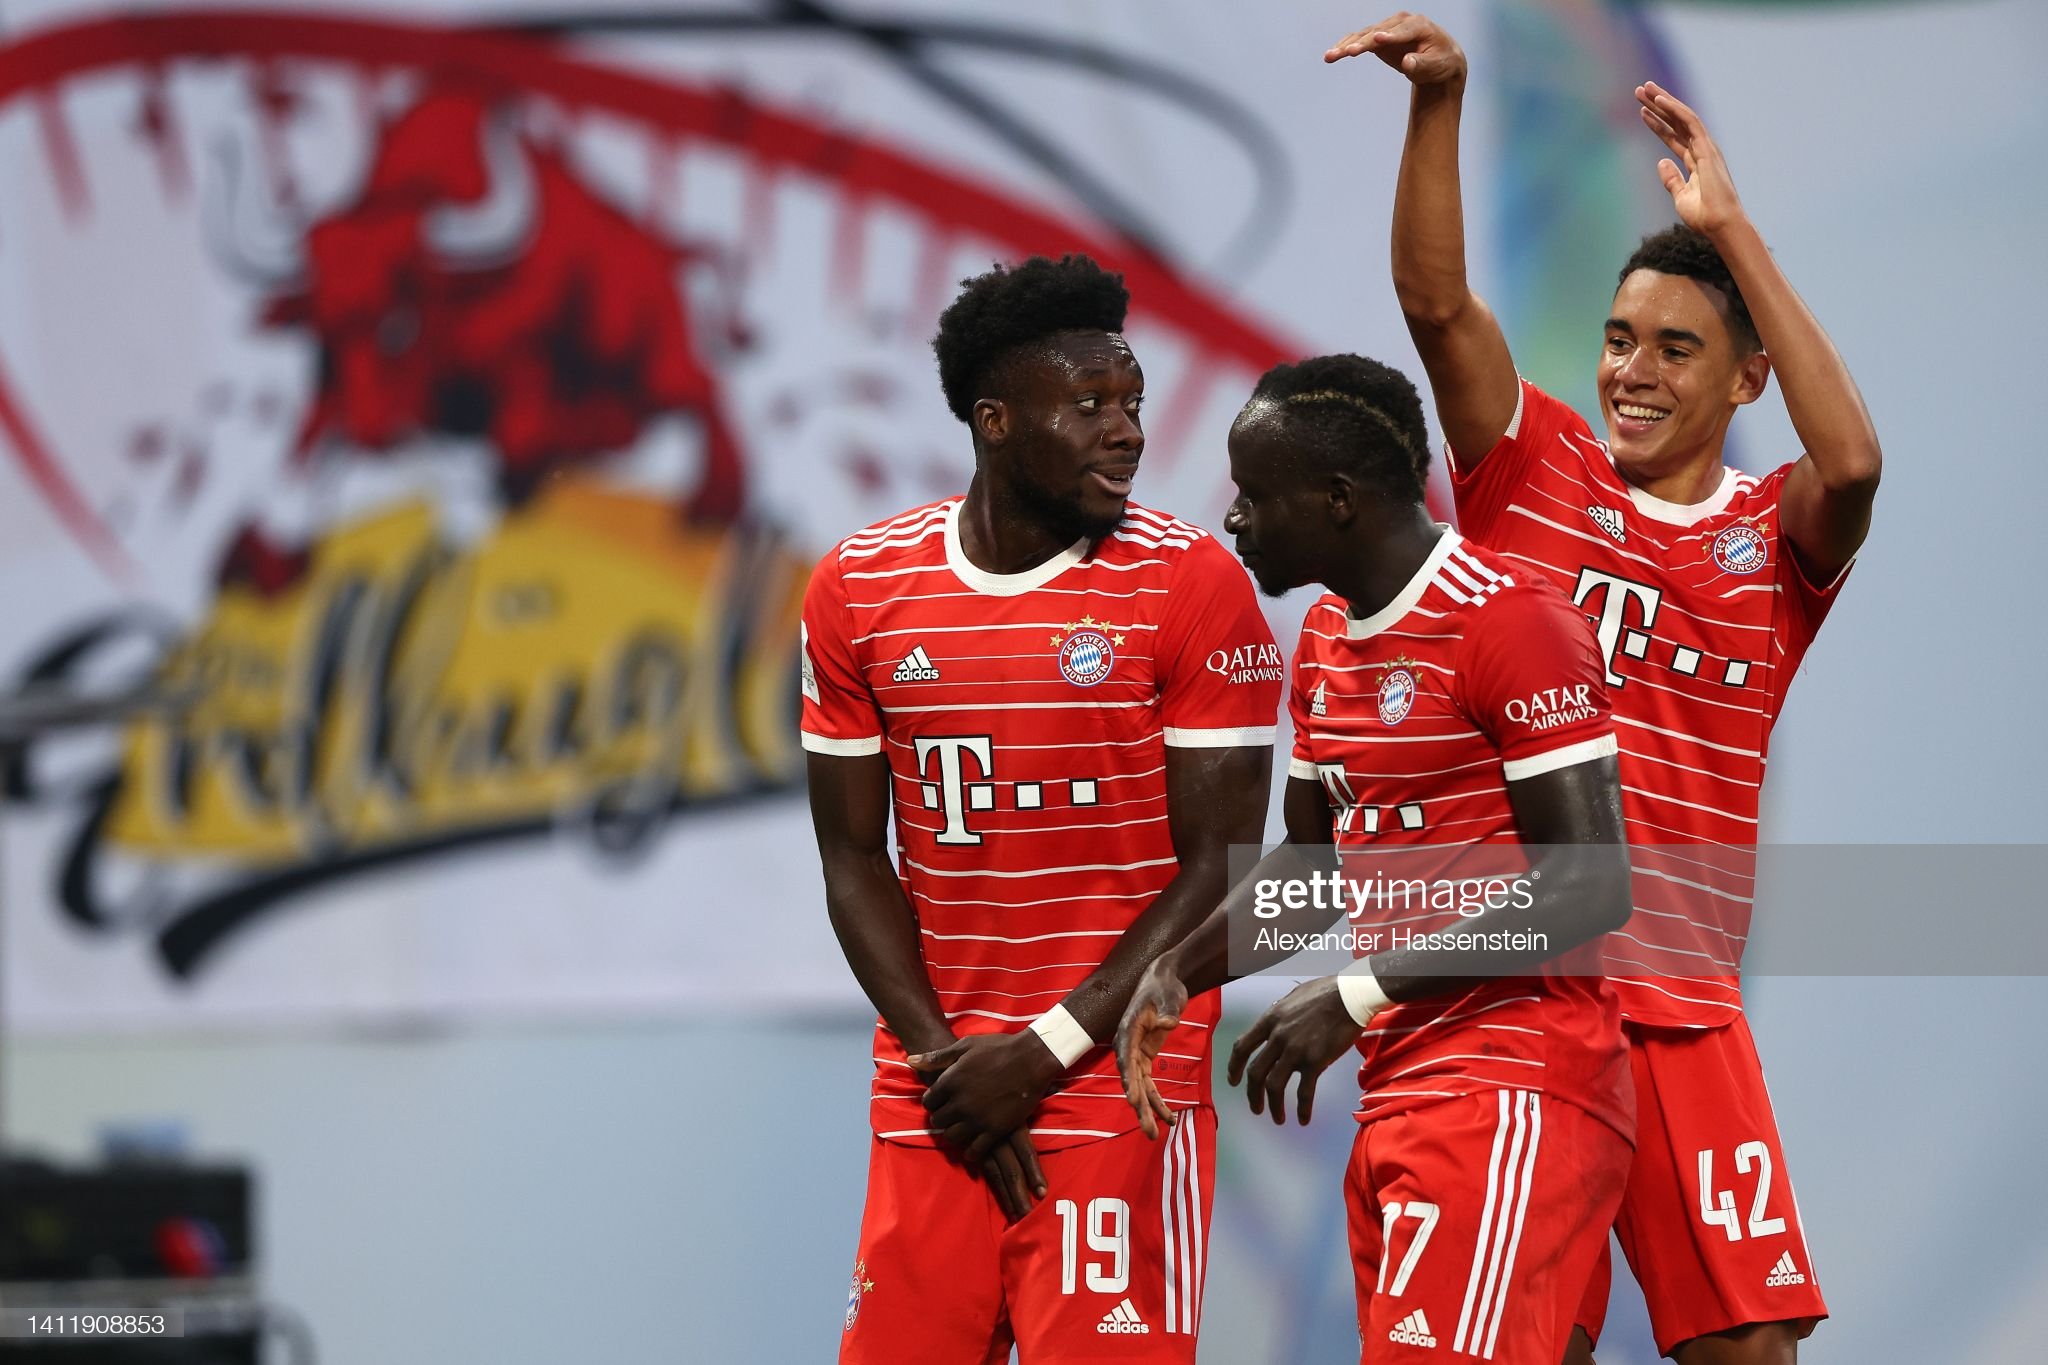 Jamal Musiala of FC Bayern München celebrates with his team mates. News Photo